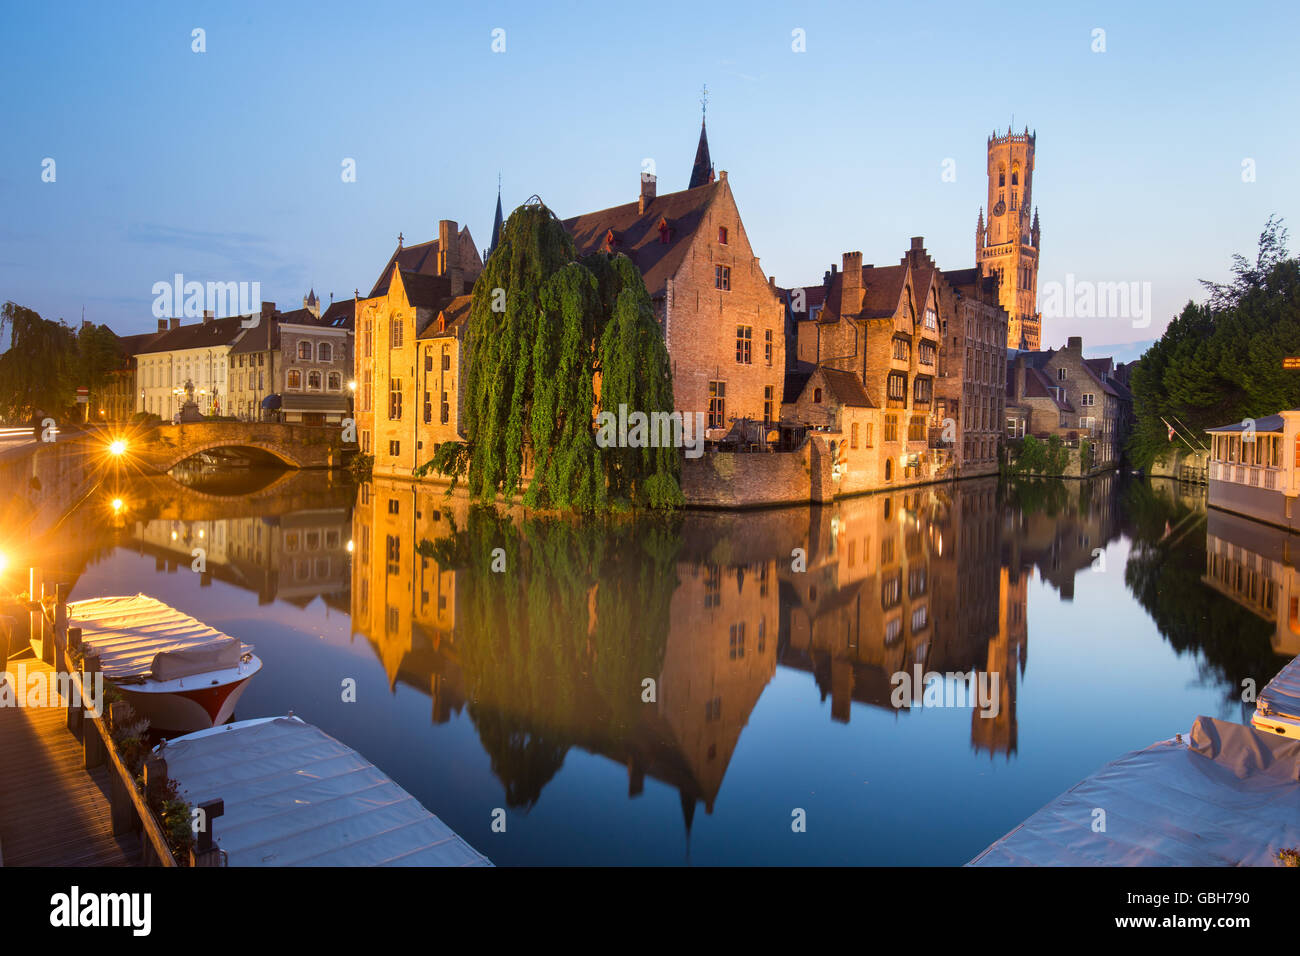 Rozenhoedkaai and Dijver river canal in Bruges, Belgium Stock Photo